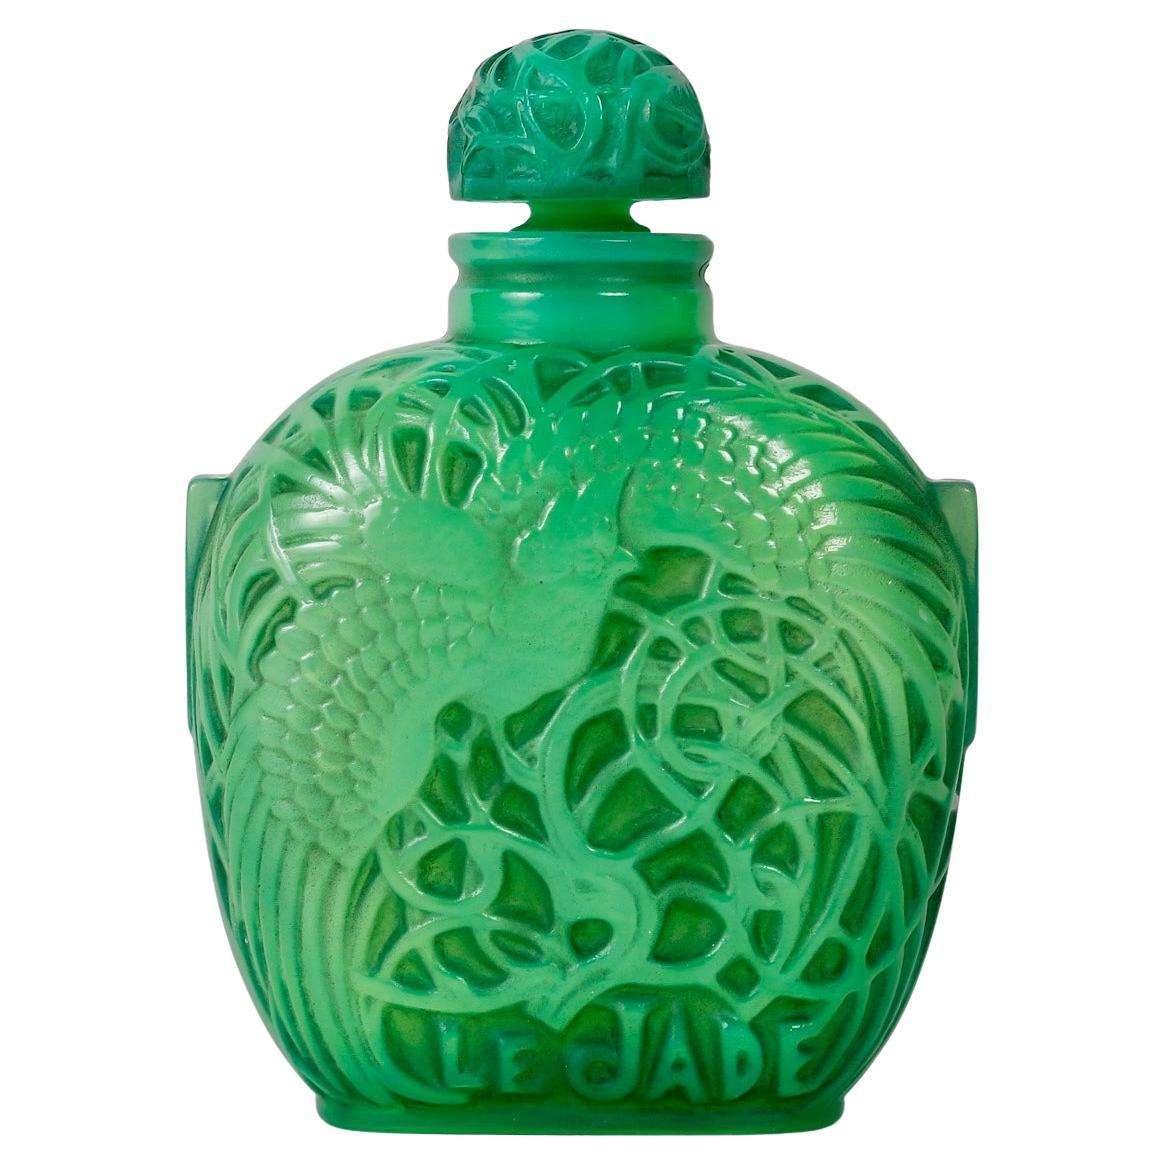 1926 René Lalique Perfume Bottle Le Jade for Roger & Gallet Jade Green Glass